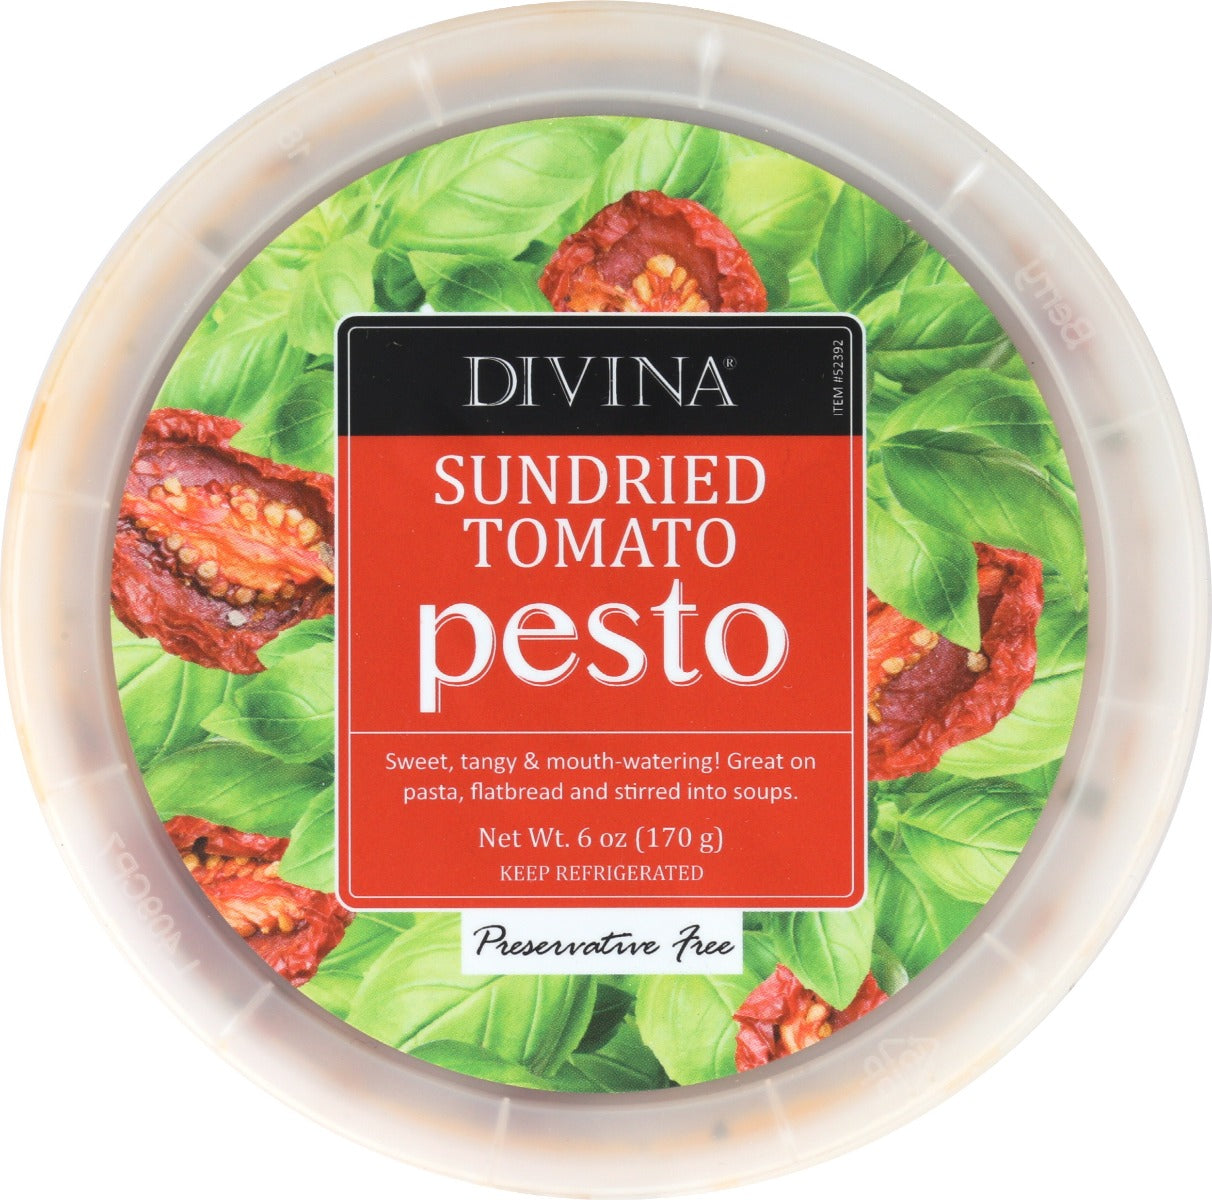 DIVINA: Sundried Tomato Pesto, 6 oz - Vending Business Solutions